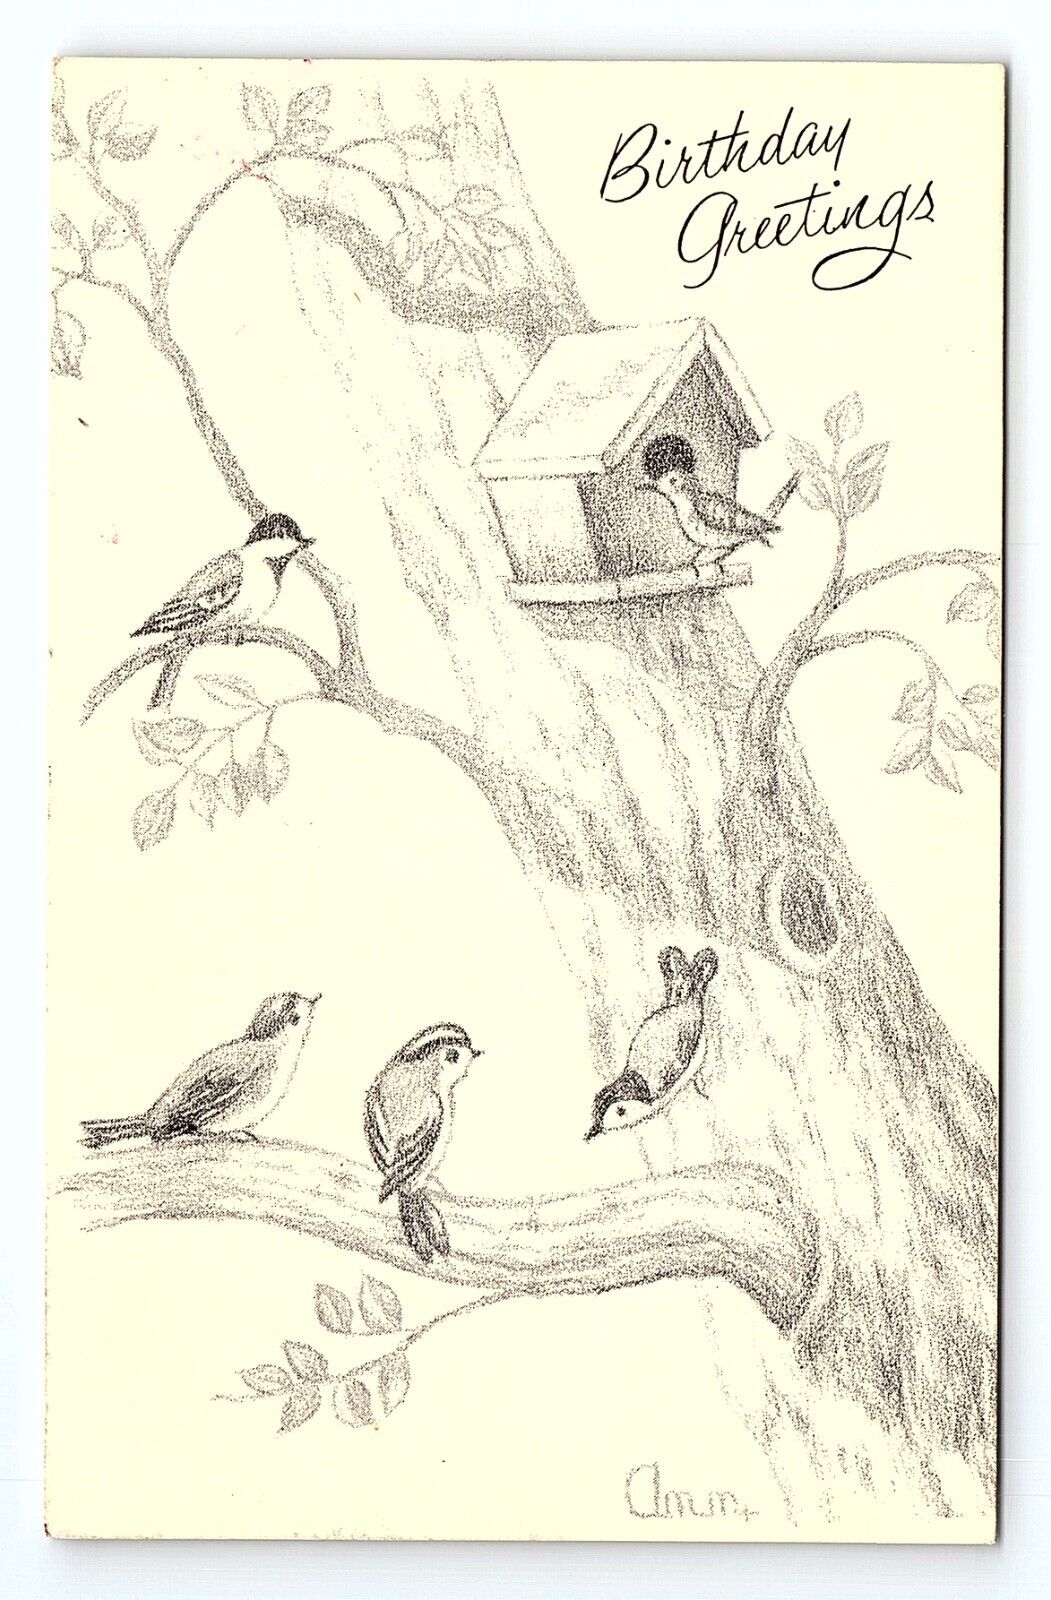 Birdhouse Birds Nest Sitting In Tree Birthday Greetings VTG Postcard A/S Sketch